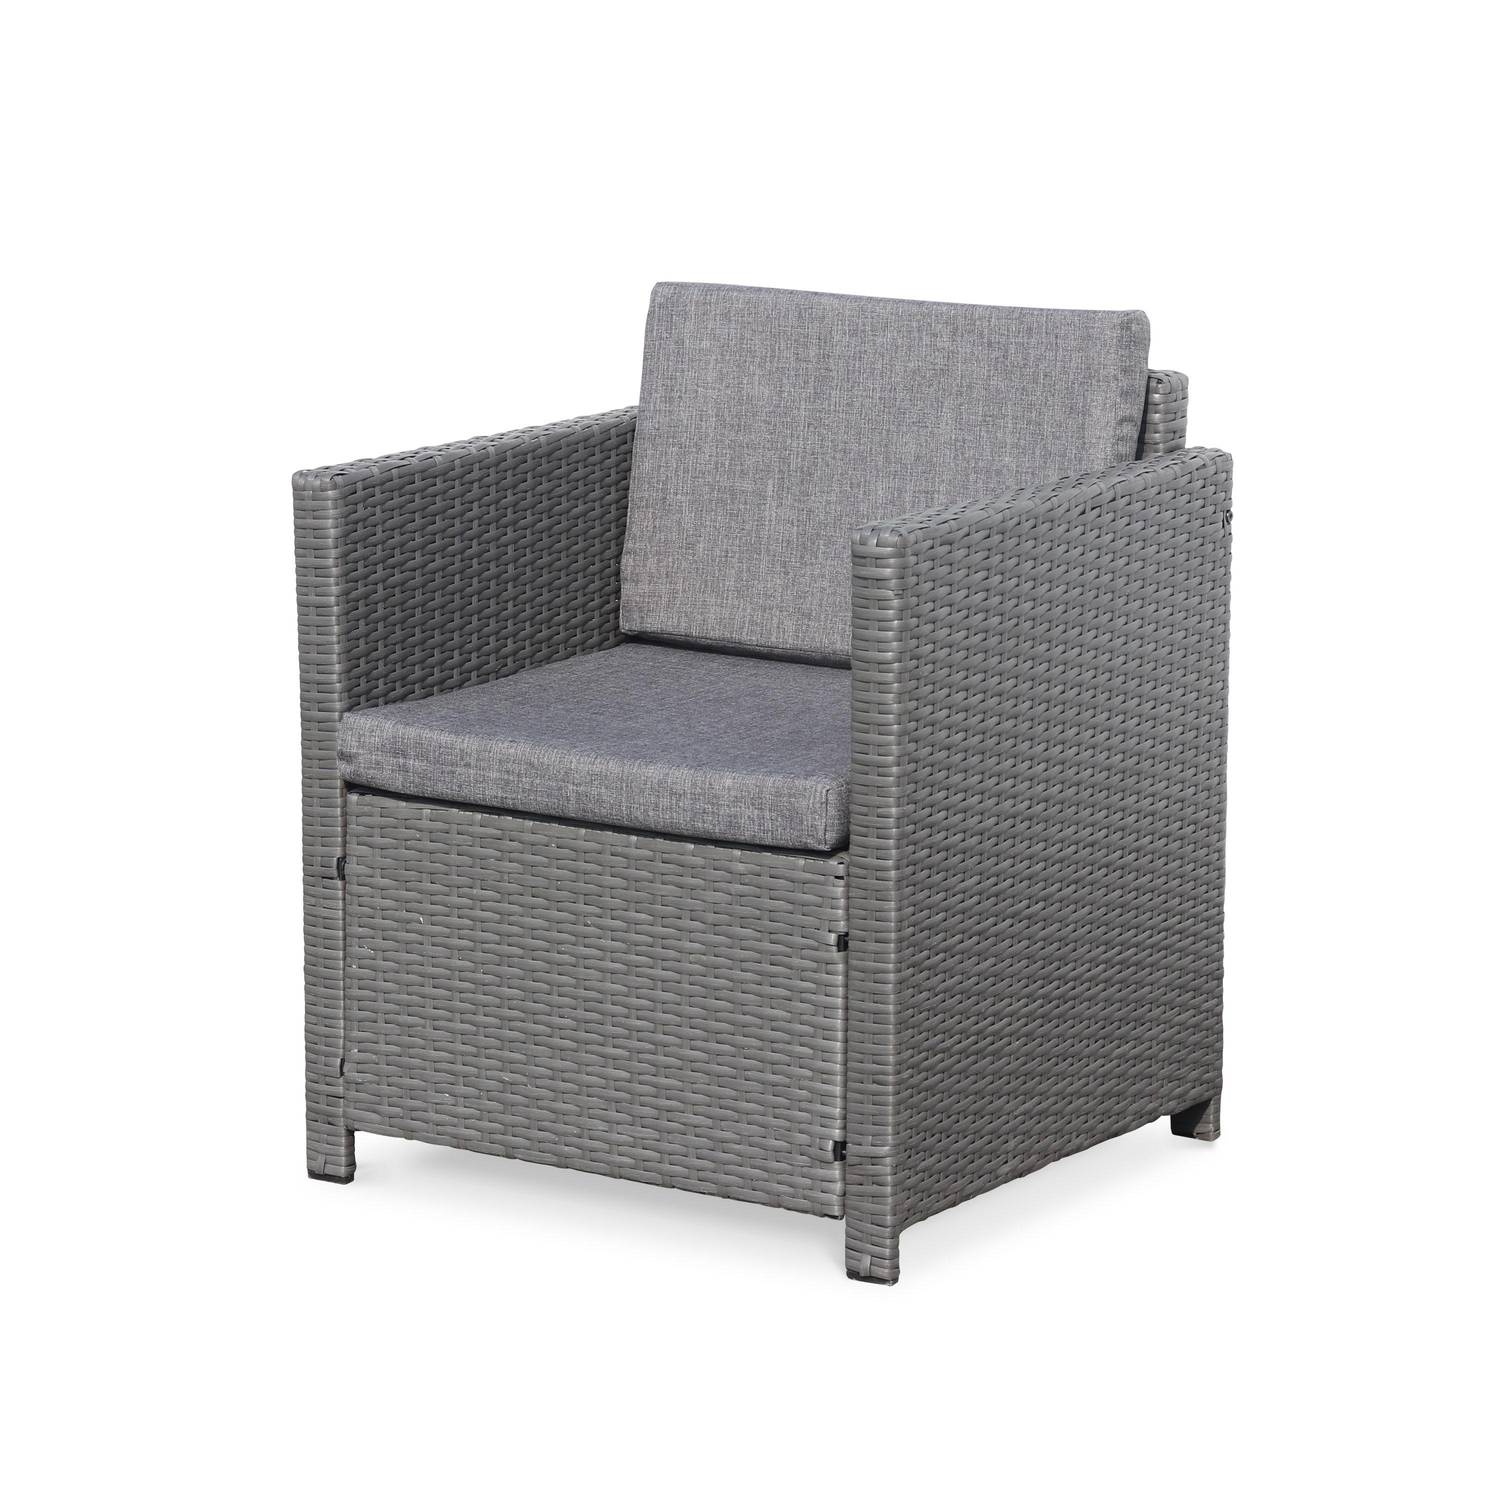 4-seater polyrattan garden sofa set - sofa, 2 armchairs, coffee table - Perugia - Grey rattan, Grey cushions Photo4